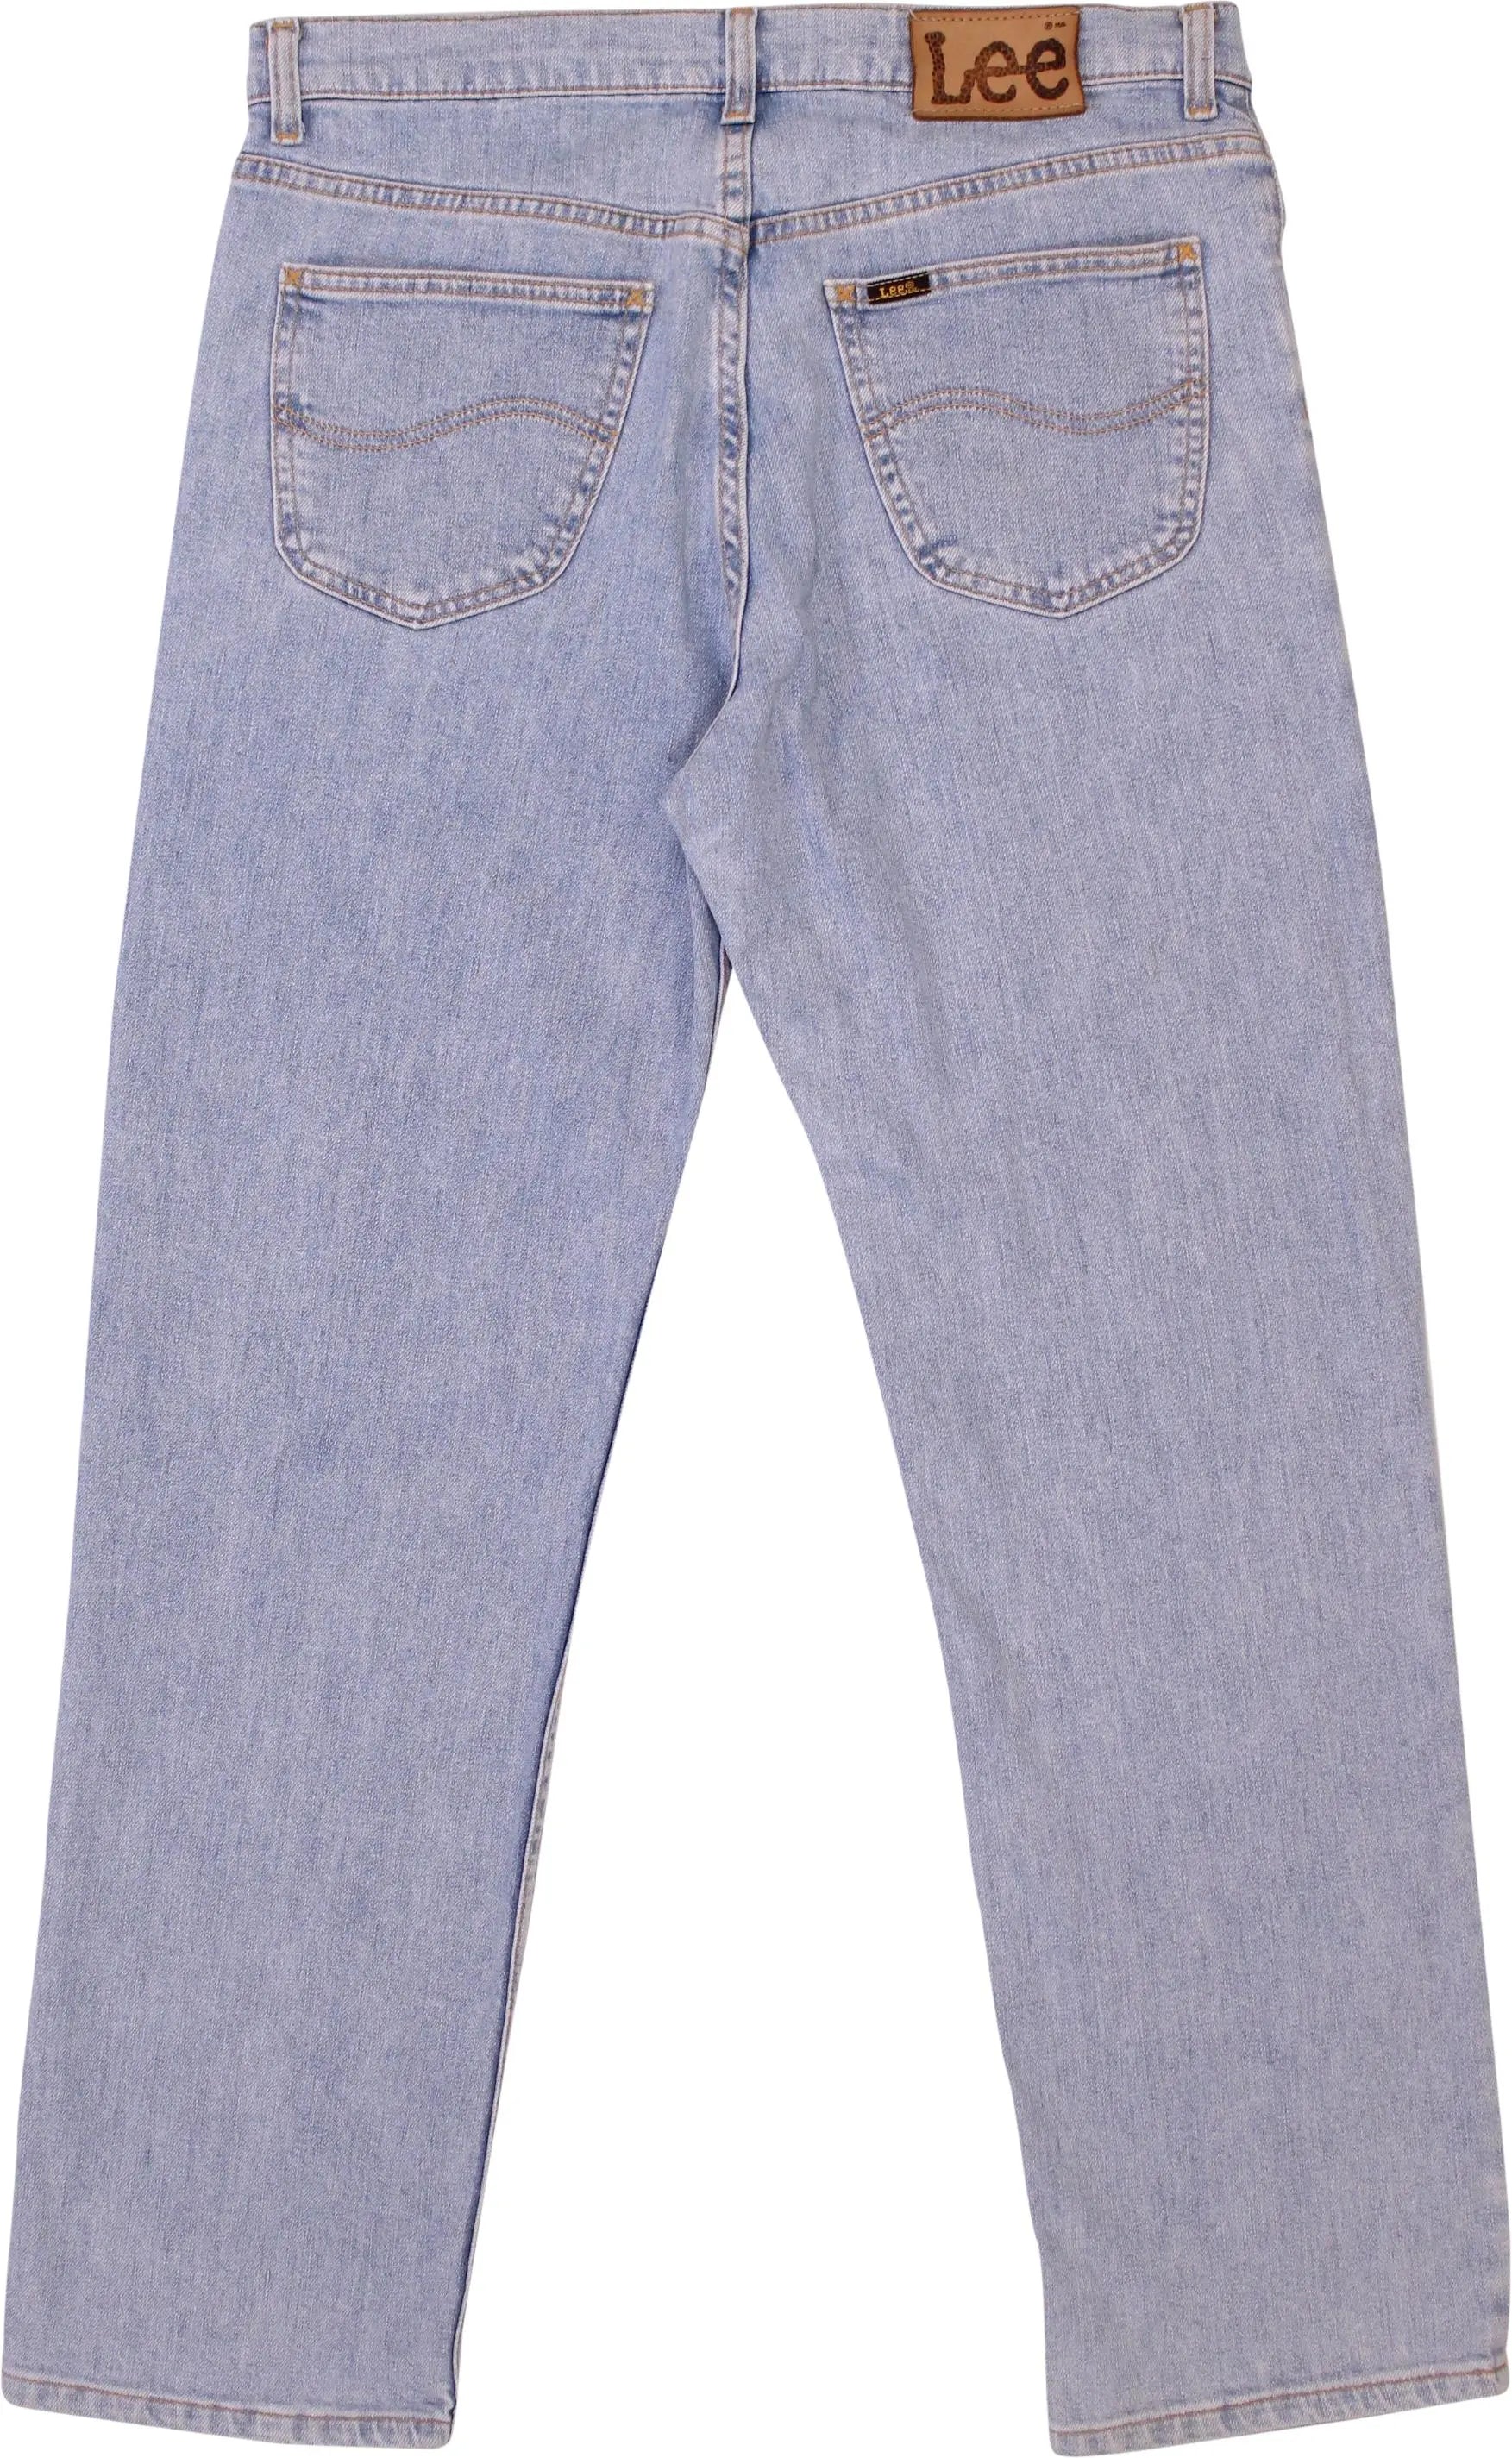 Lee - Vintage Lee Jeans- ThriftTale.com - Vintage and second handclothing